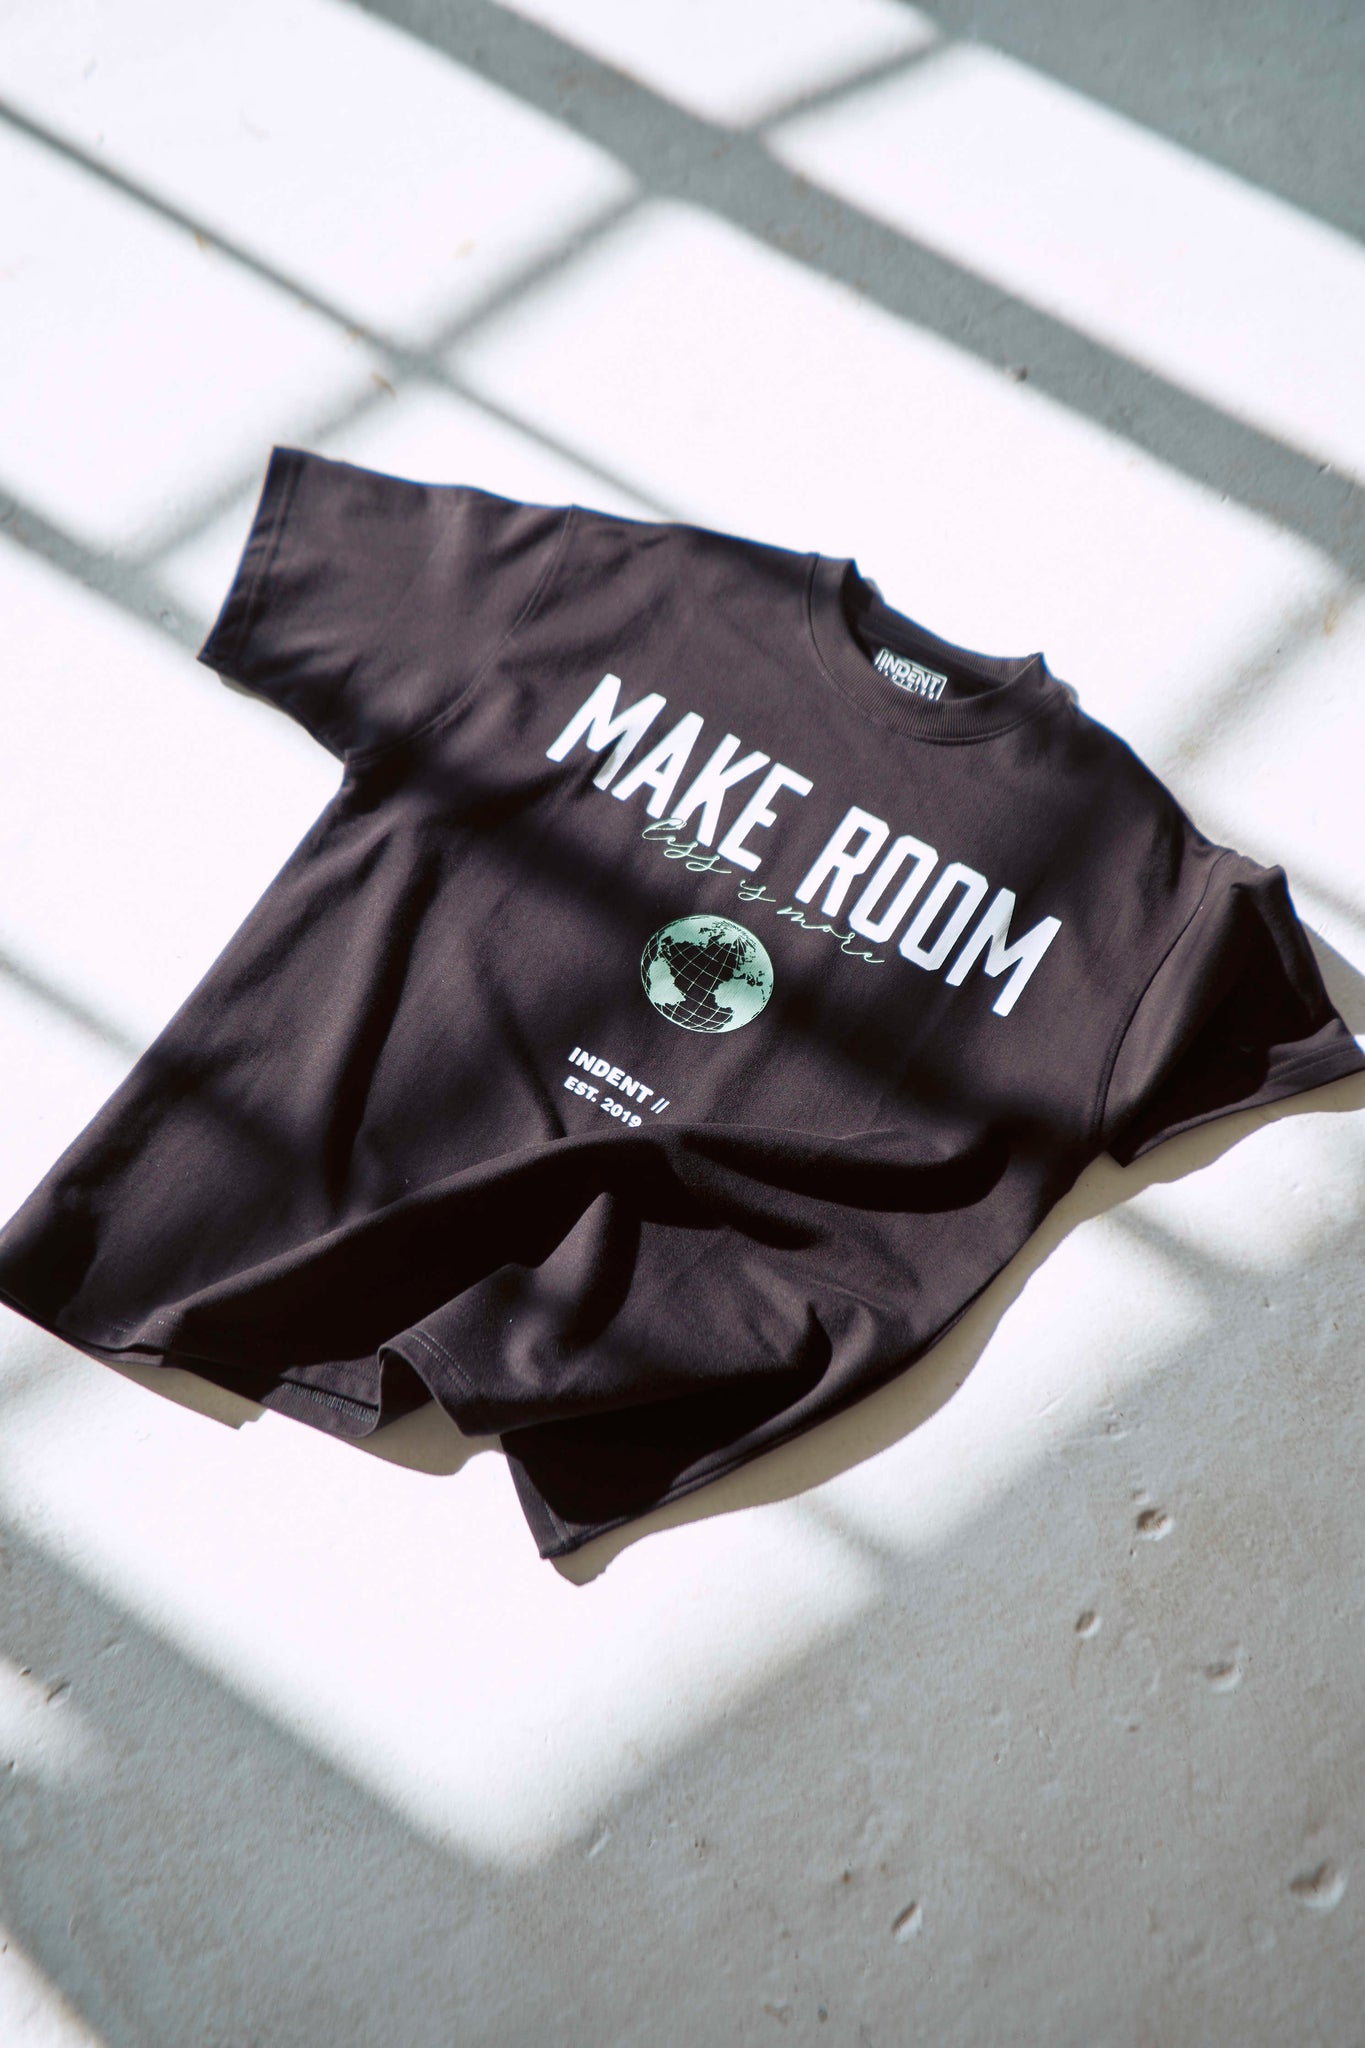 "Make Room" T- shirt - Catastrophic Black